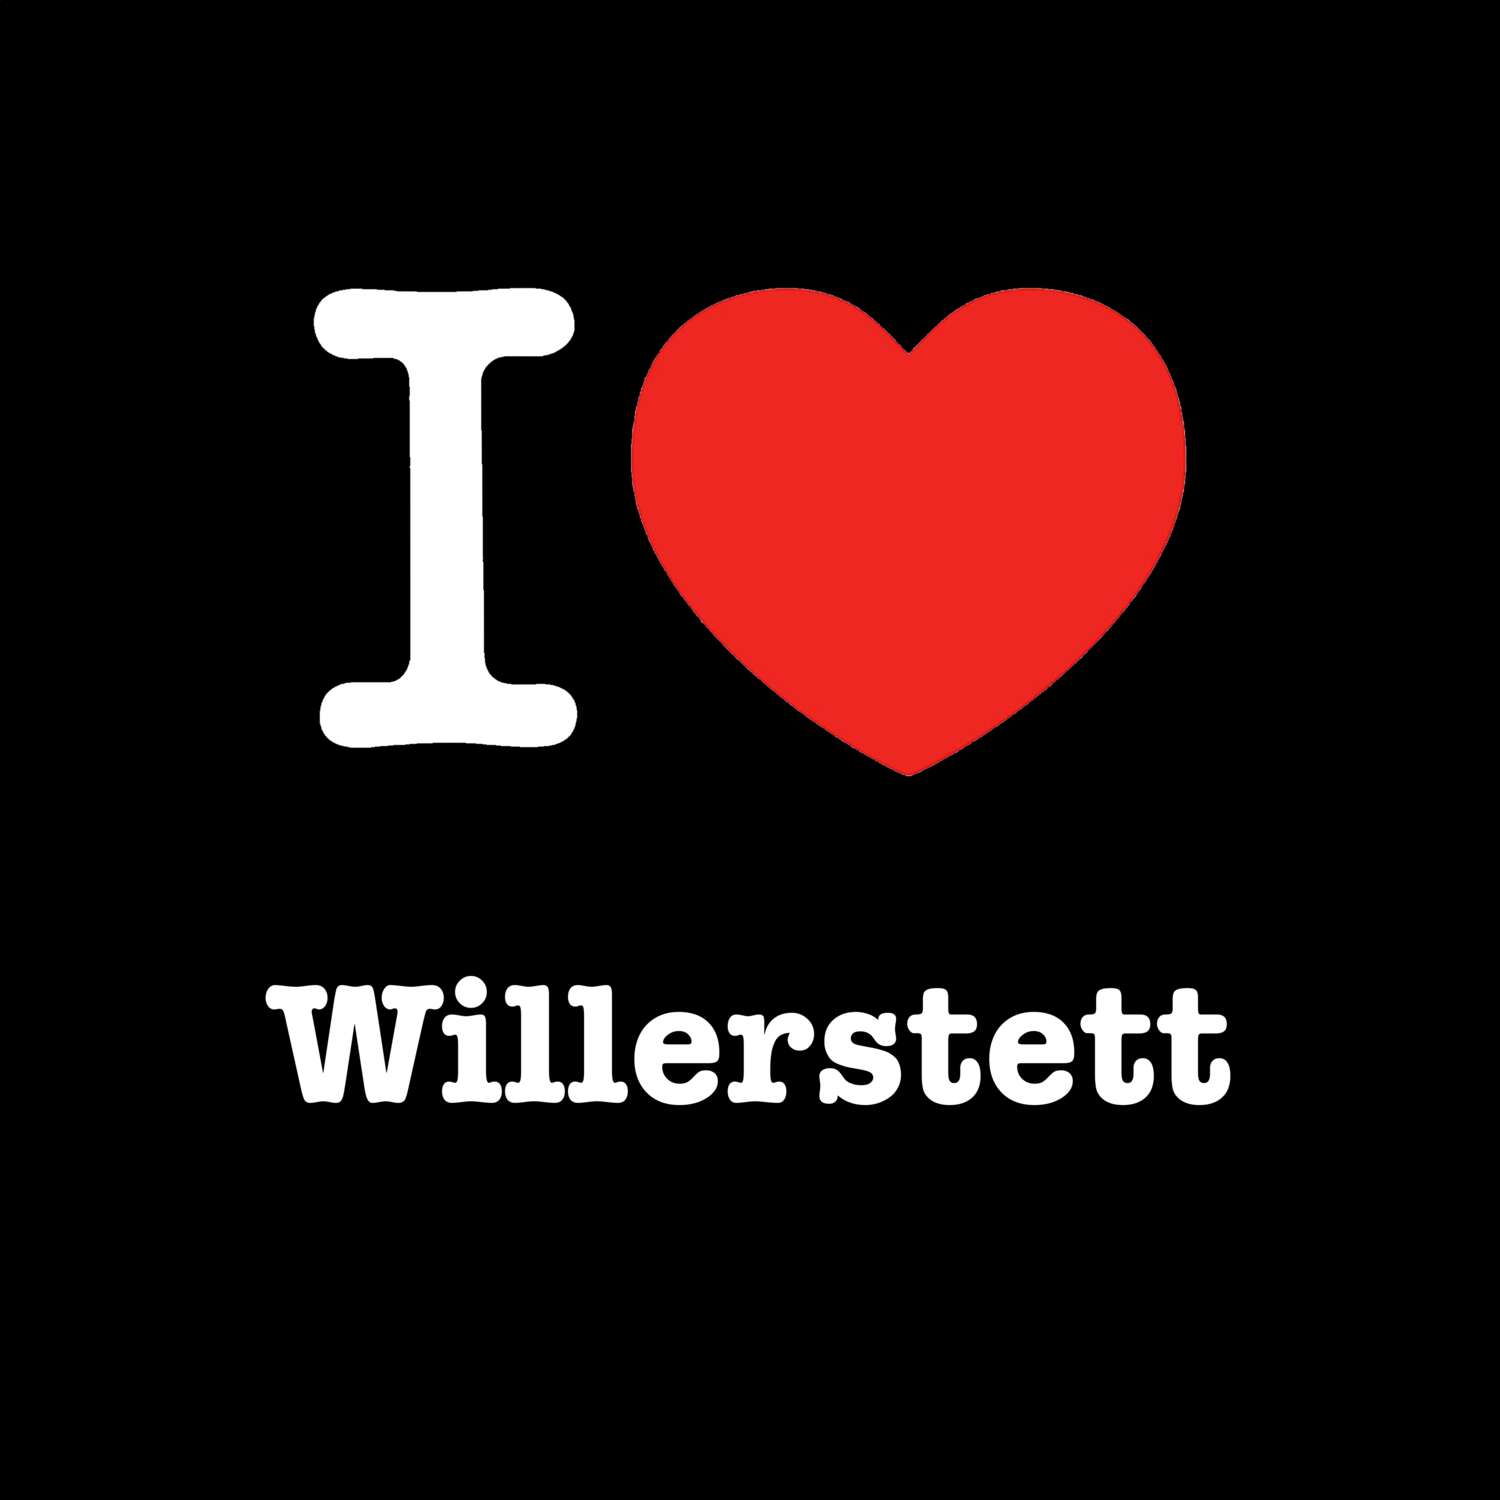 Willerstett T-Shirt »I love«